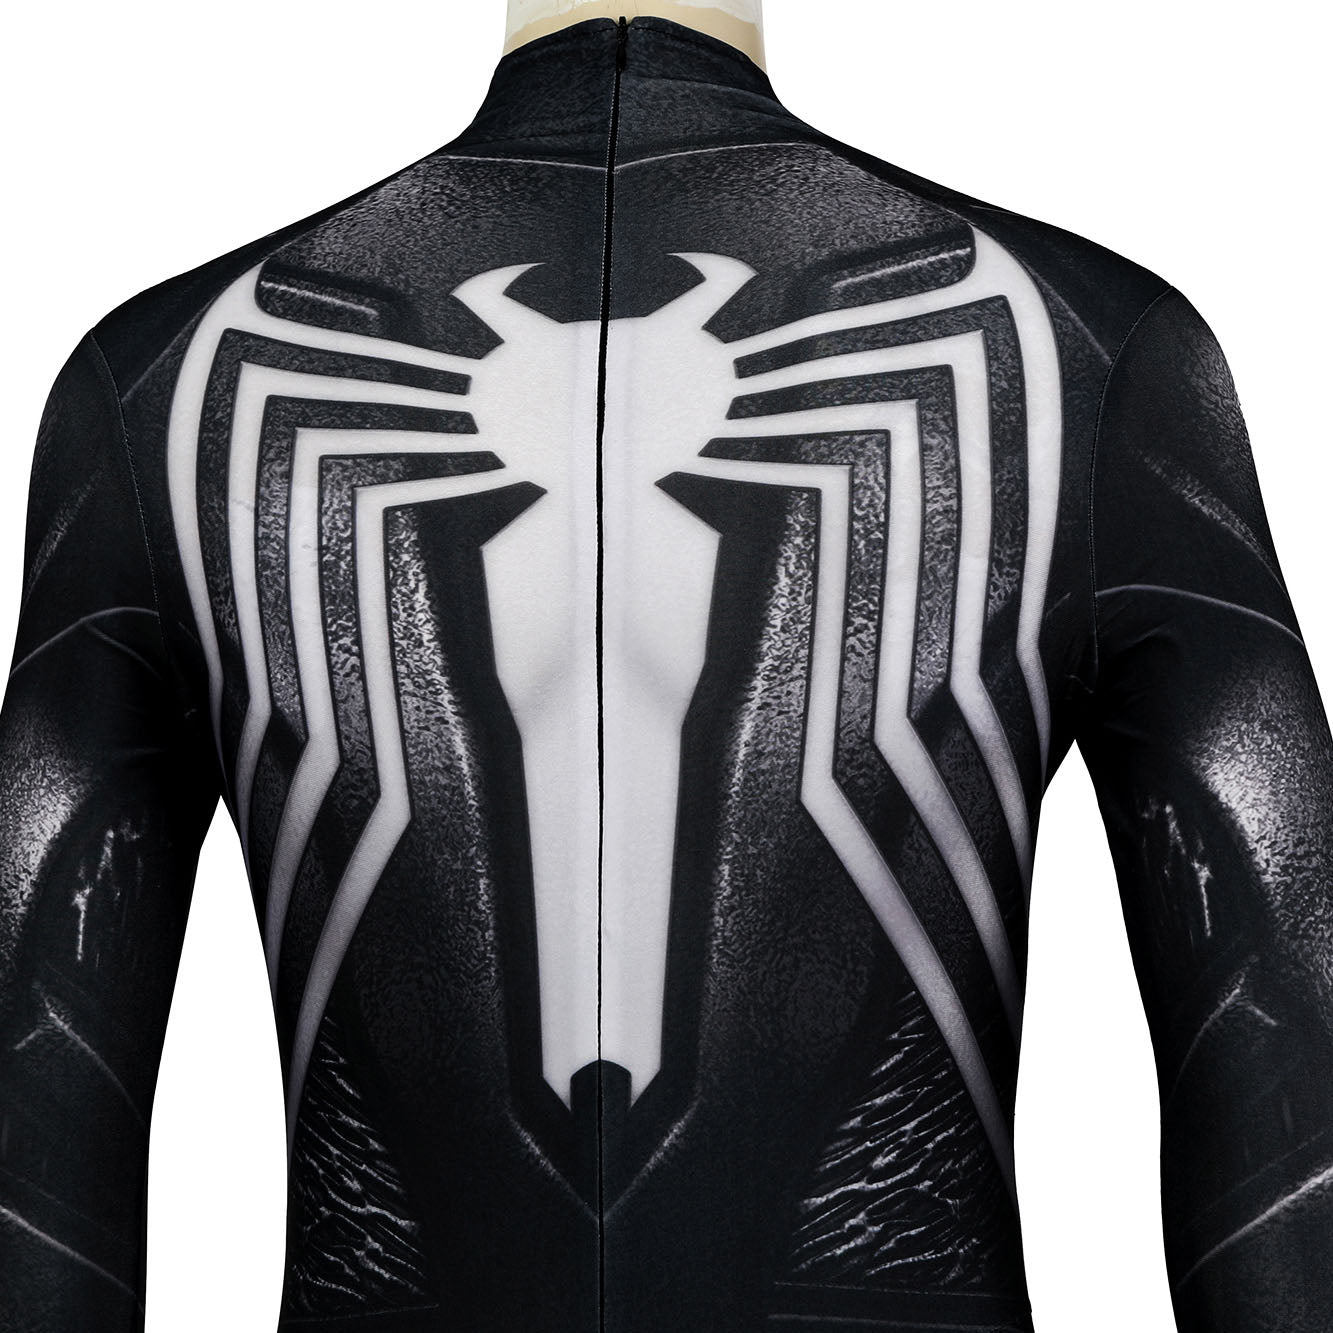 Marvel's Spider-Man 2 Venom Black Suit Male Jumpsuit Cosplay Costumes